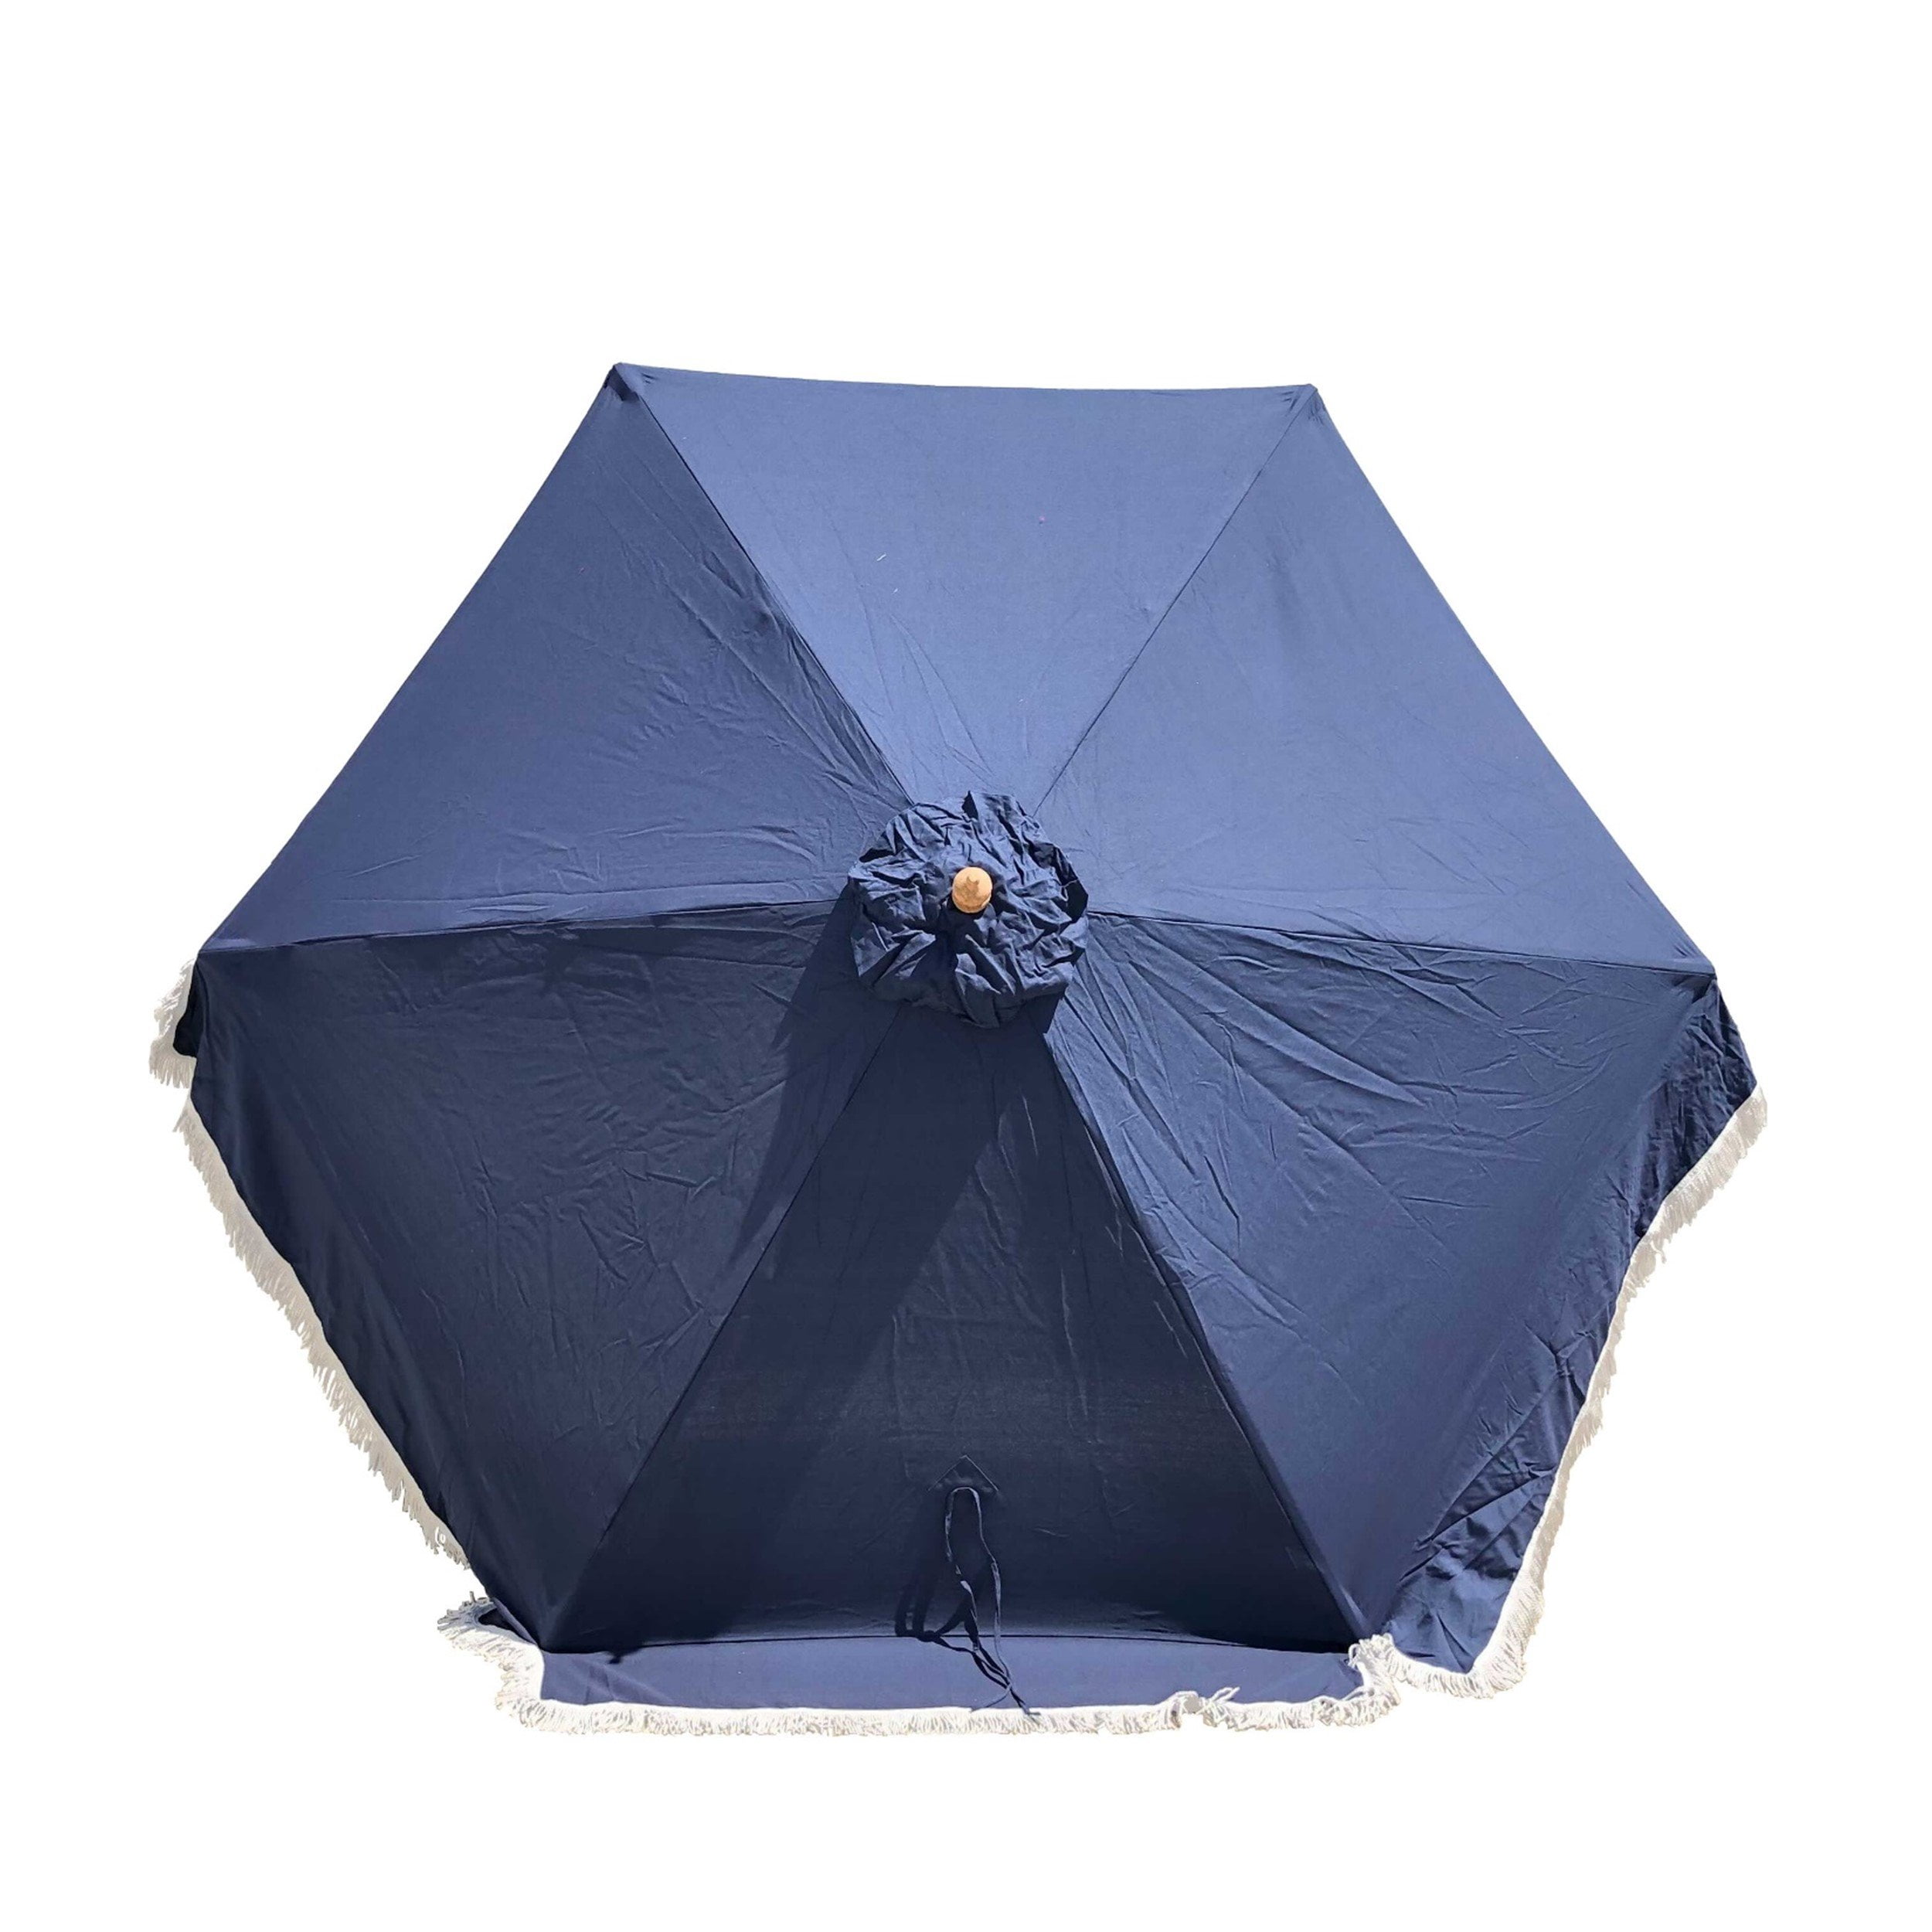 Outdoor Parasol Accessory Kit Replacement Umbrella Repair Cord Thicker Hand  Crank Outdoor Patio Umbrella Accessories